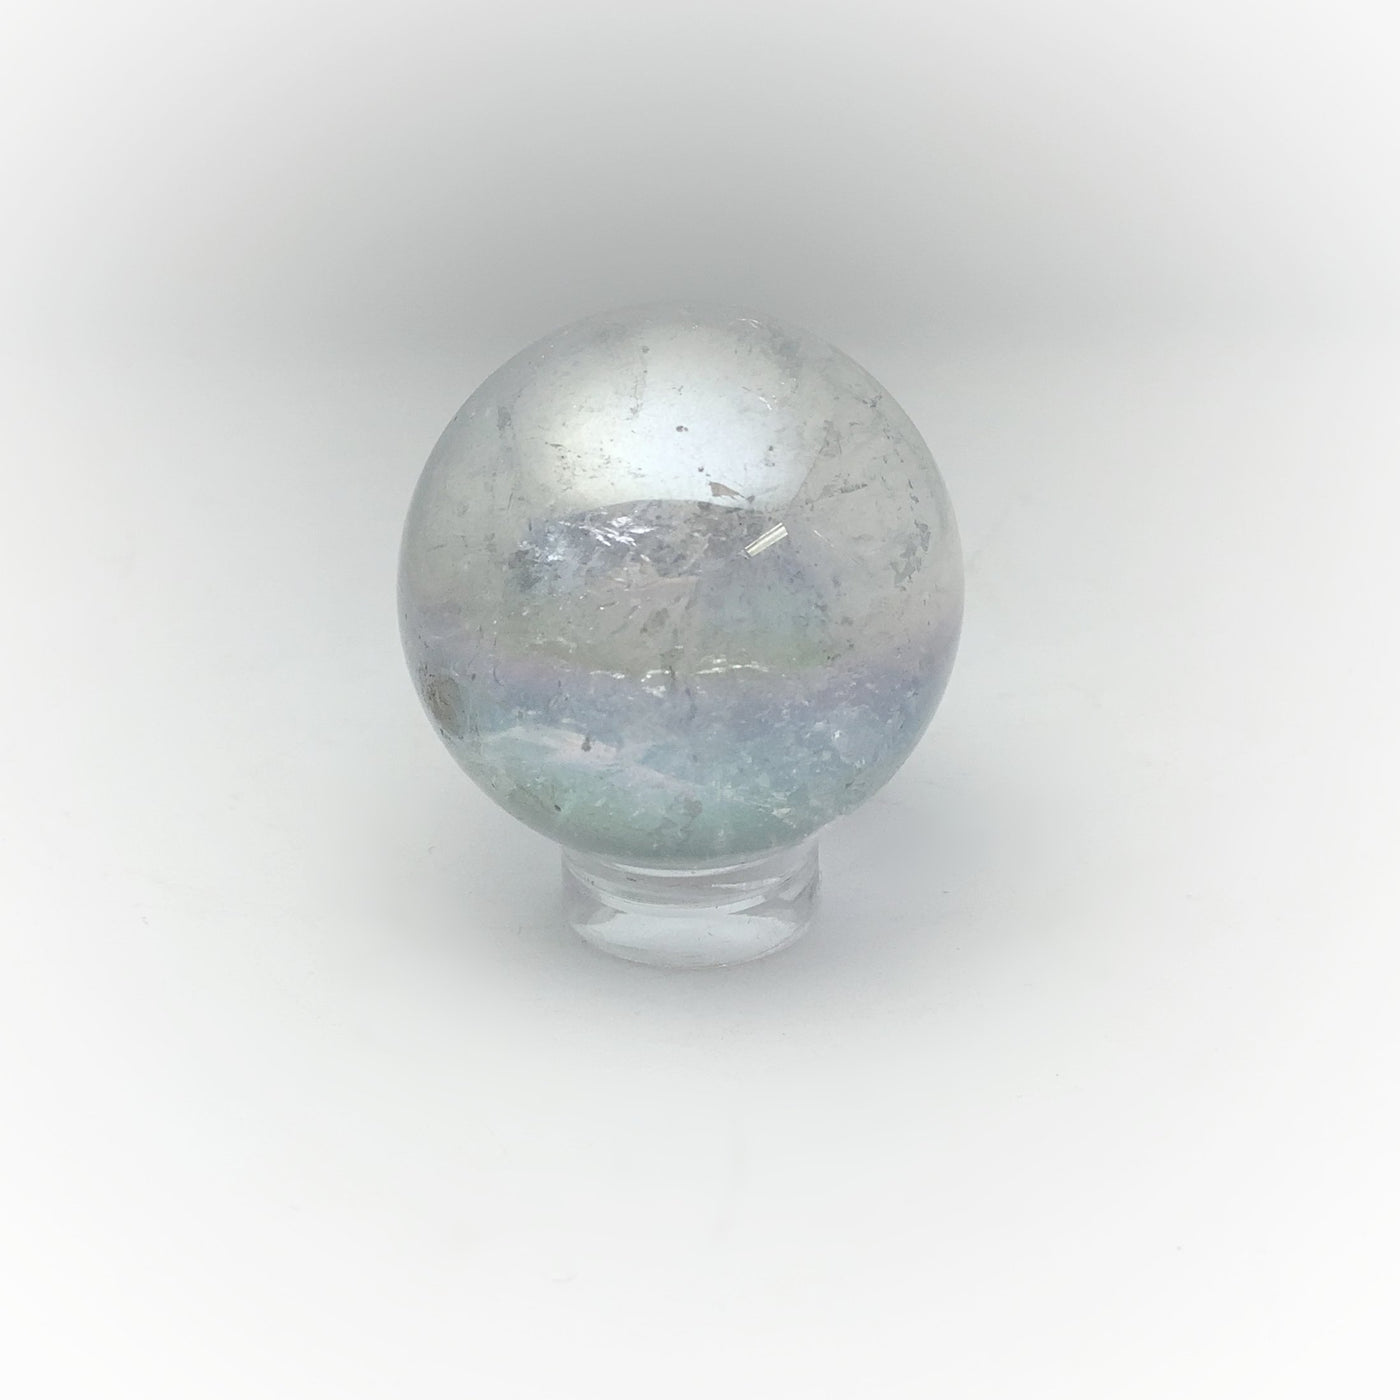 Opalescent Aura Quartz Sphere at $69 Each